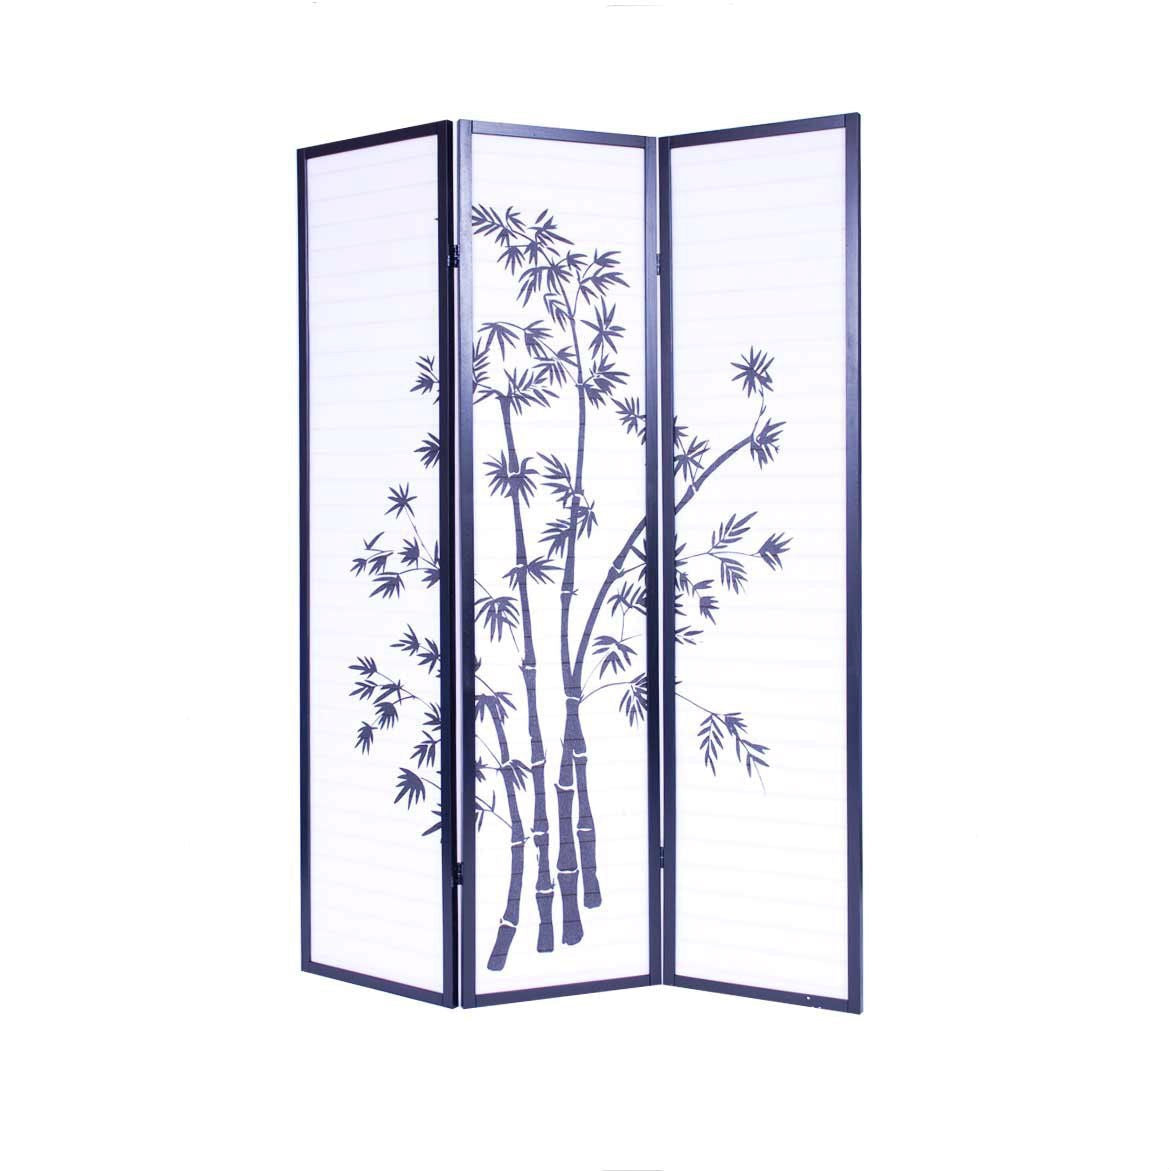 3-Panel Asian Shoji Screen Room Divider with Bamboo Print-Novel Home